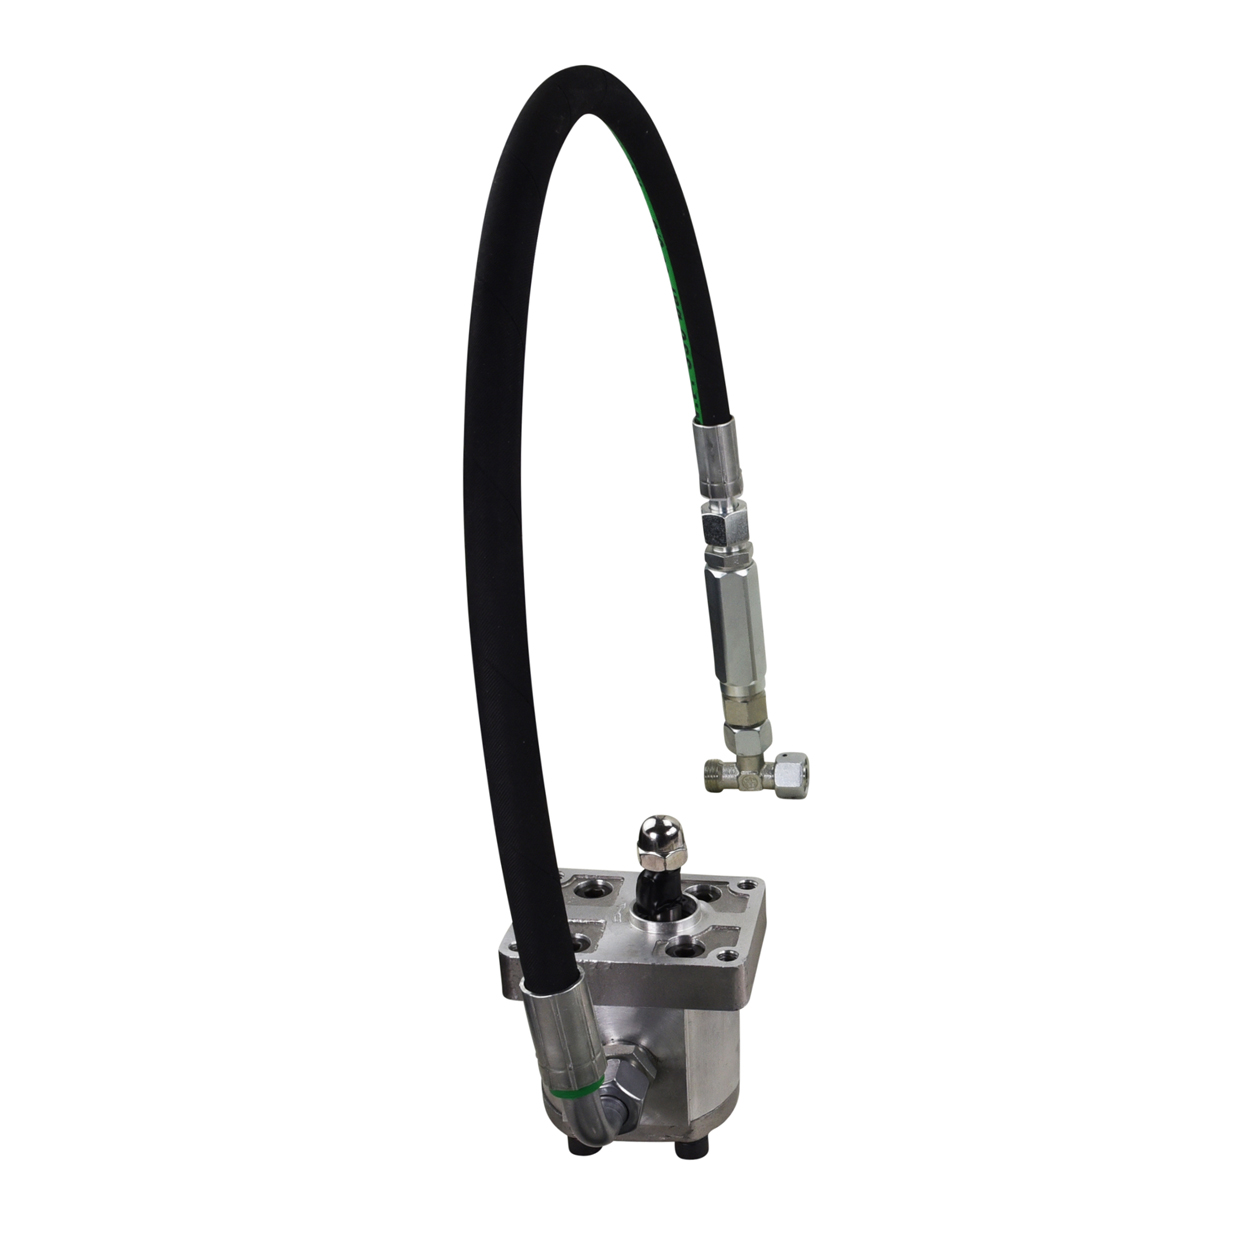 PumpFast – trailer hydraulic pump set for cordless screwdriver operation